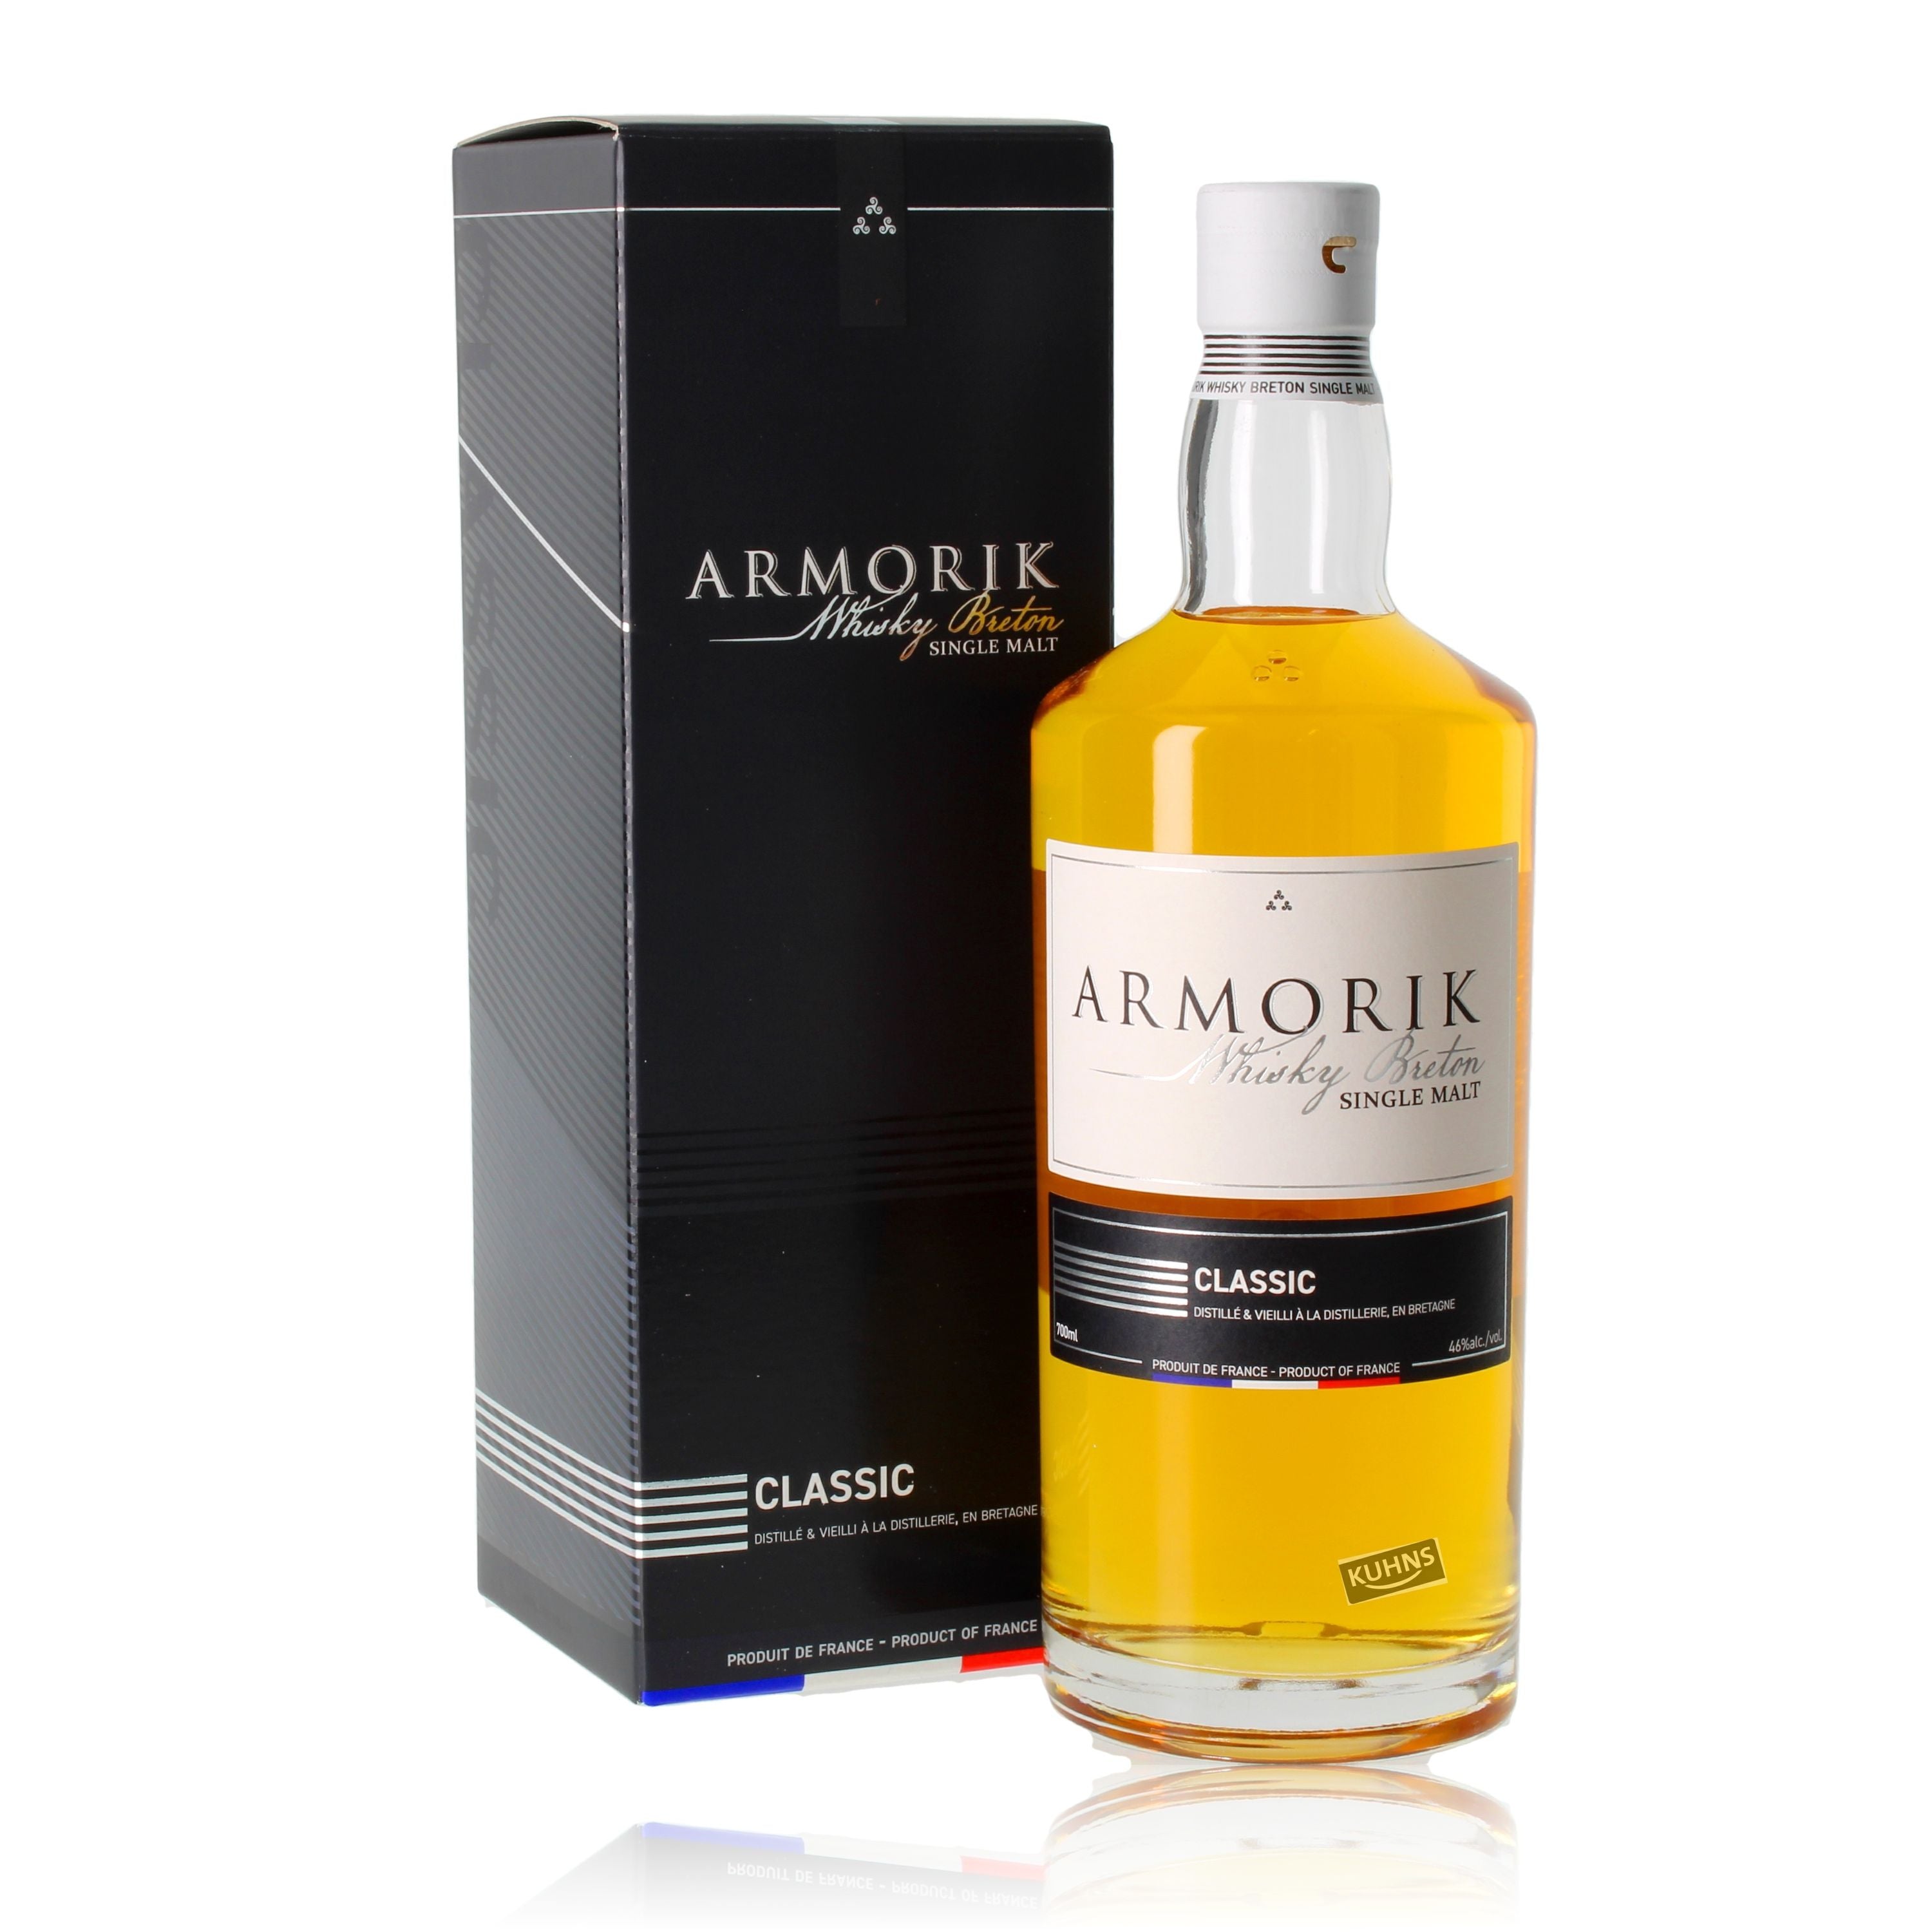 Armorik Classic Single Malt Whisky France 0,7l, alk. 46 tilavuusprosenttia.